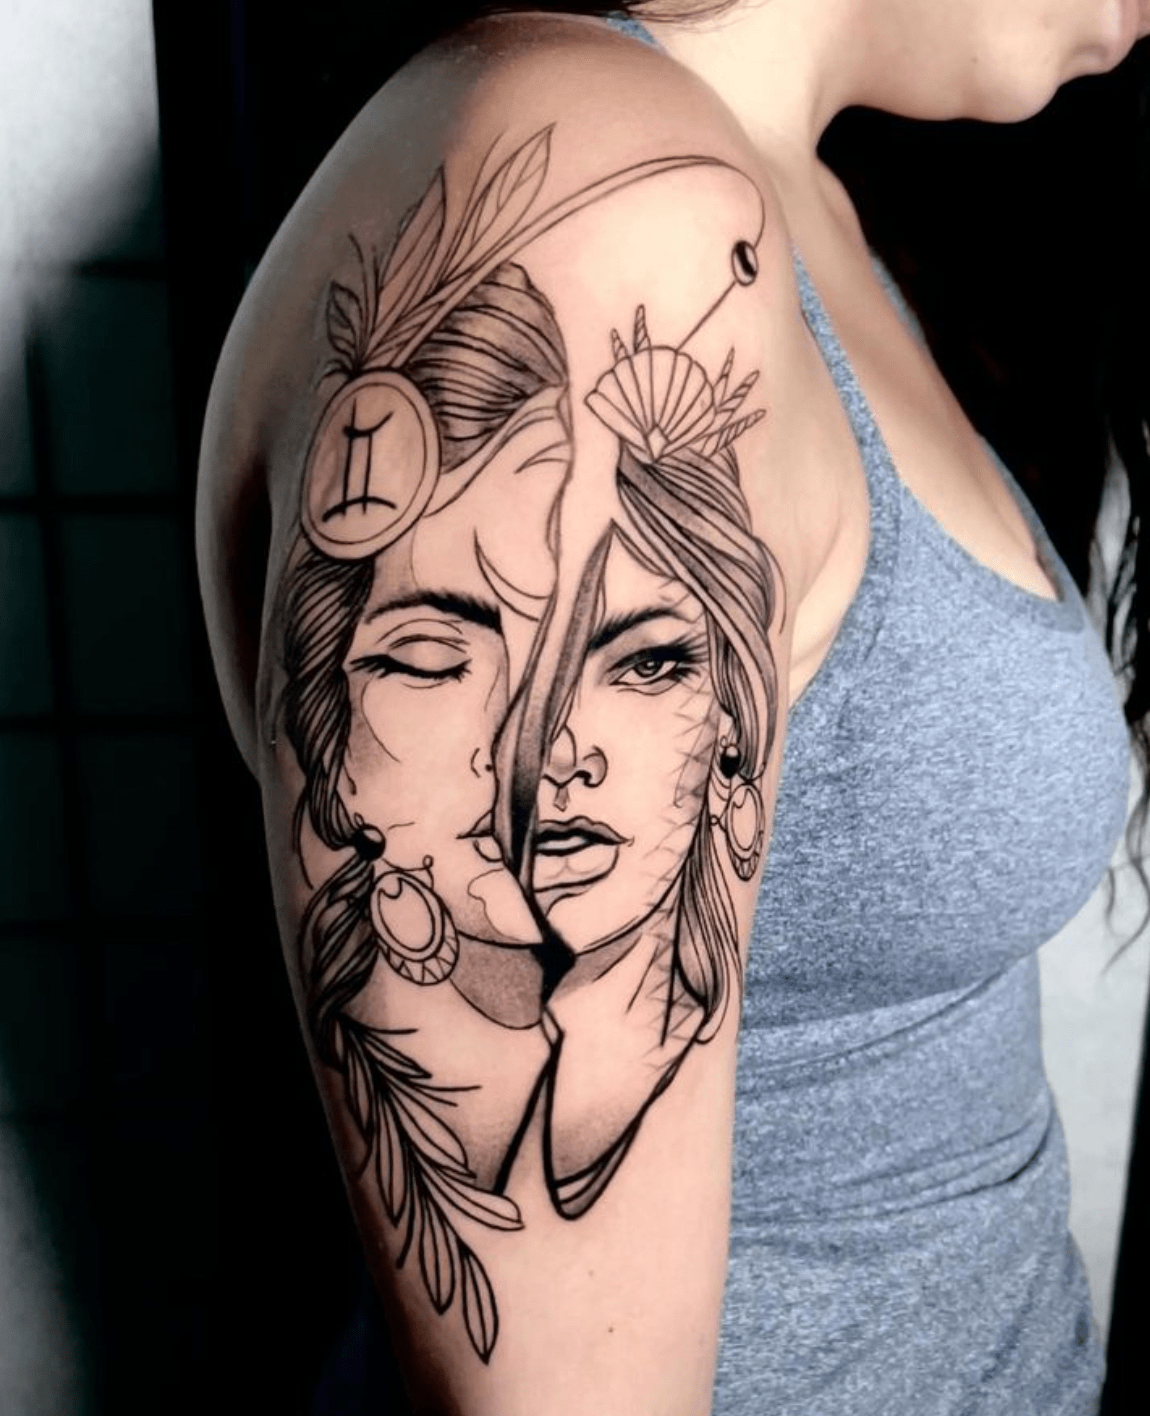 Creative Tattoo Ideas According To Your Zodiac Sign — INK ME TORONTO